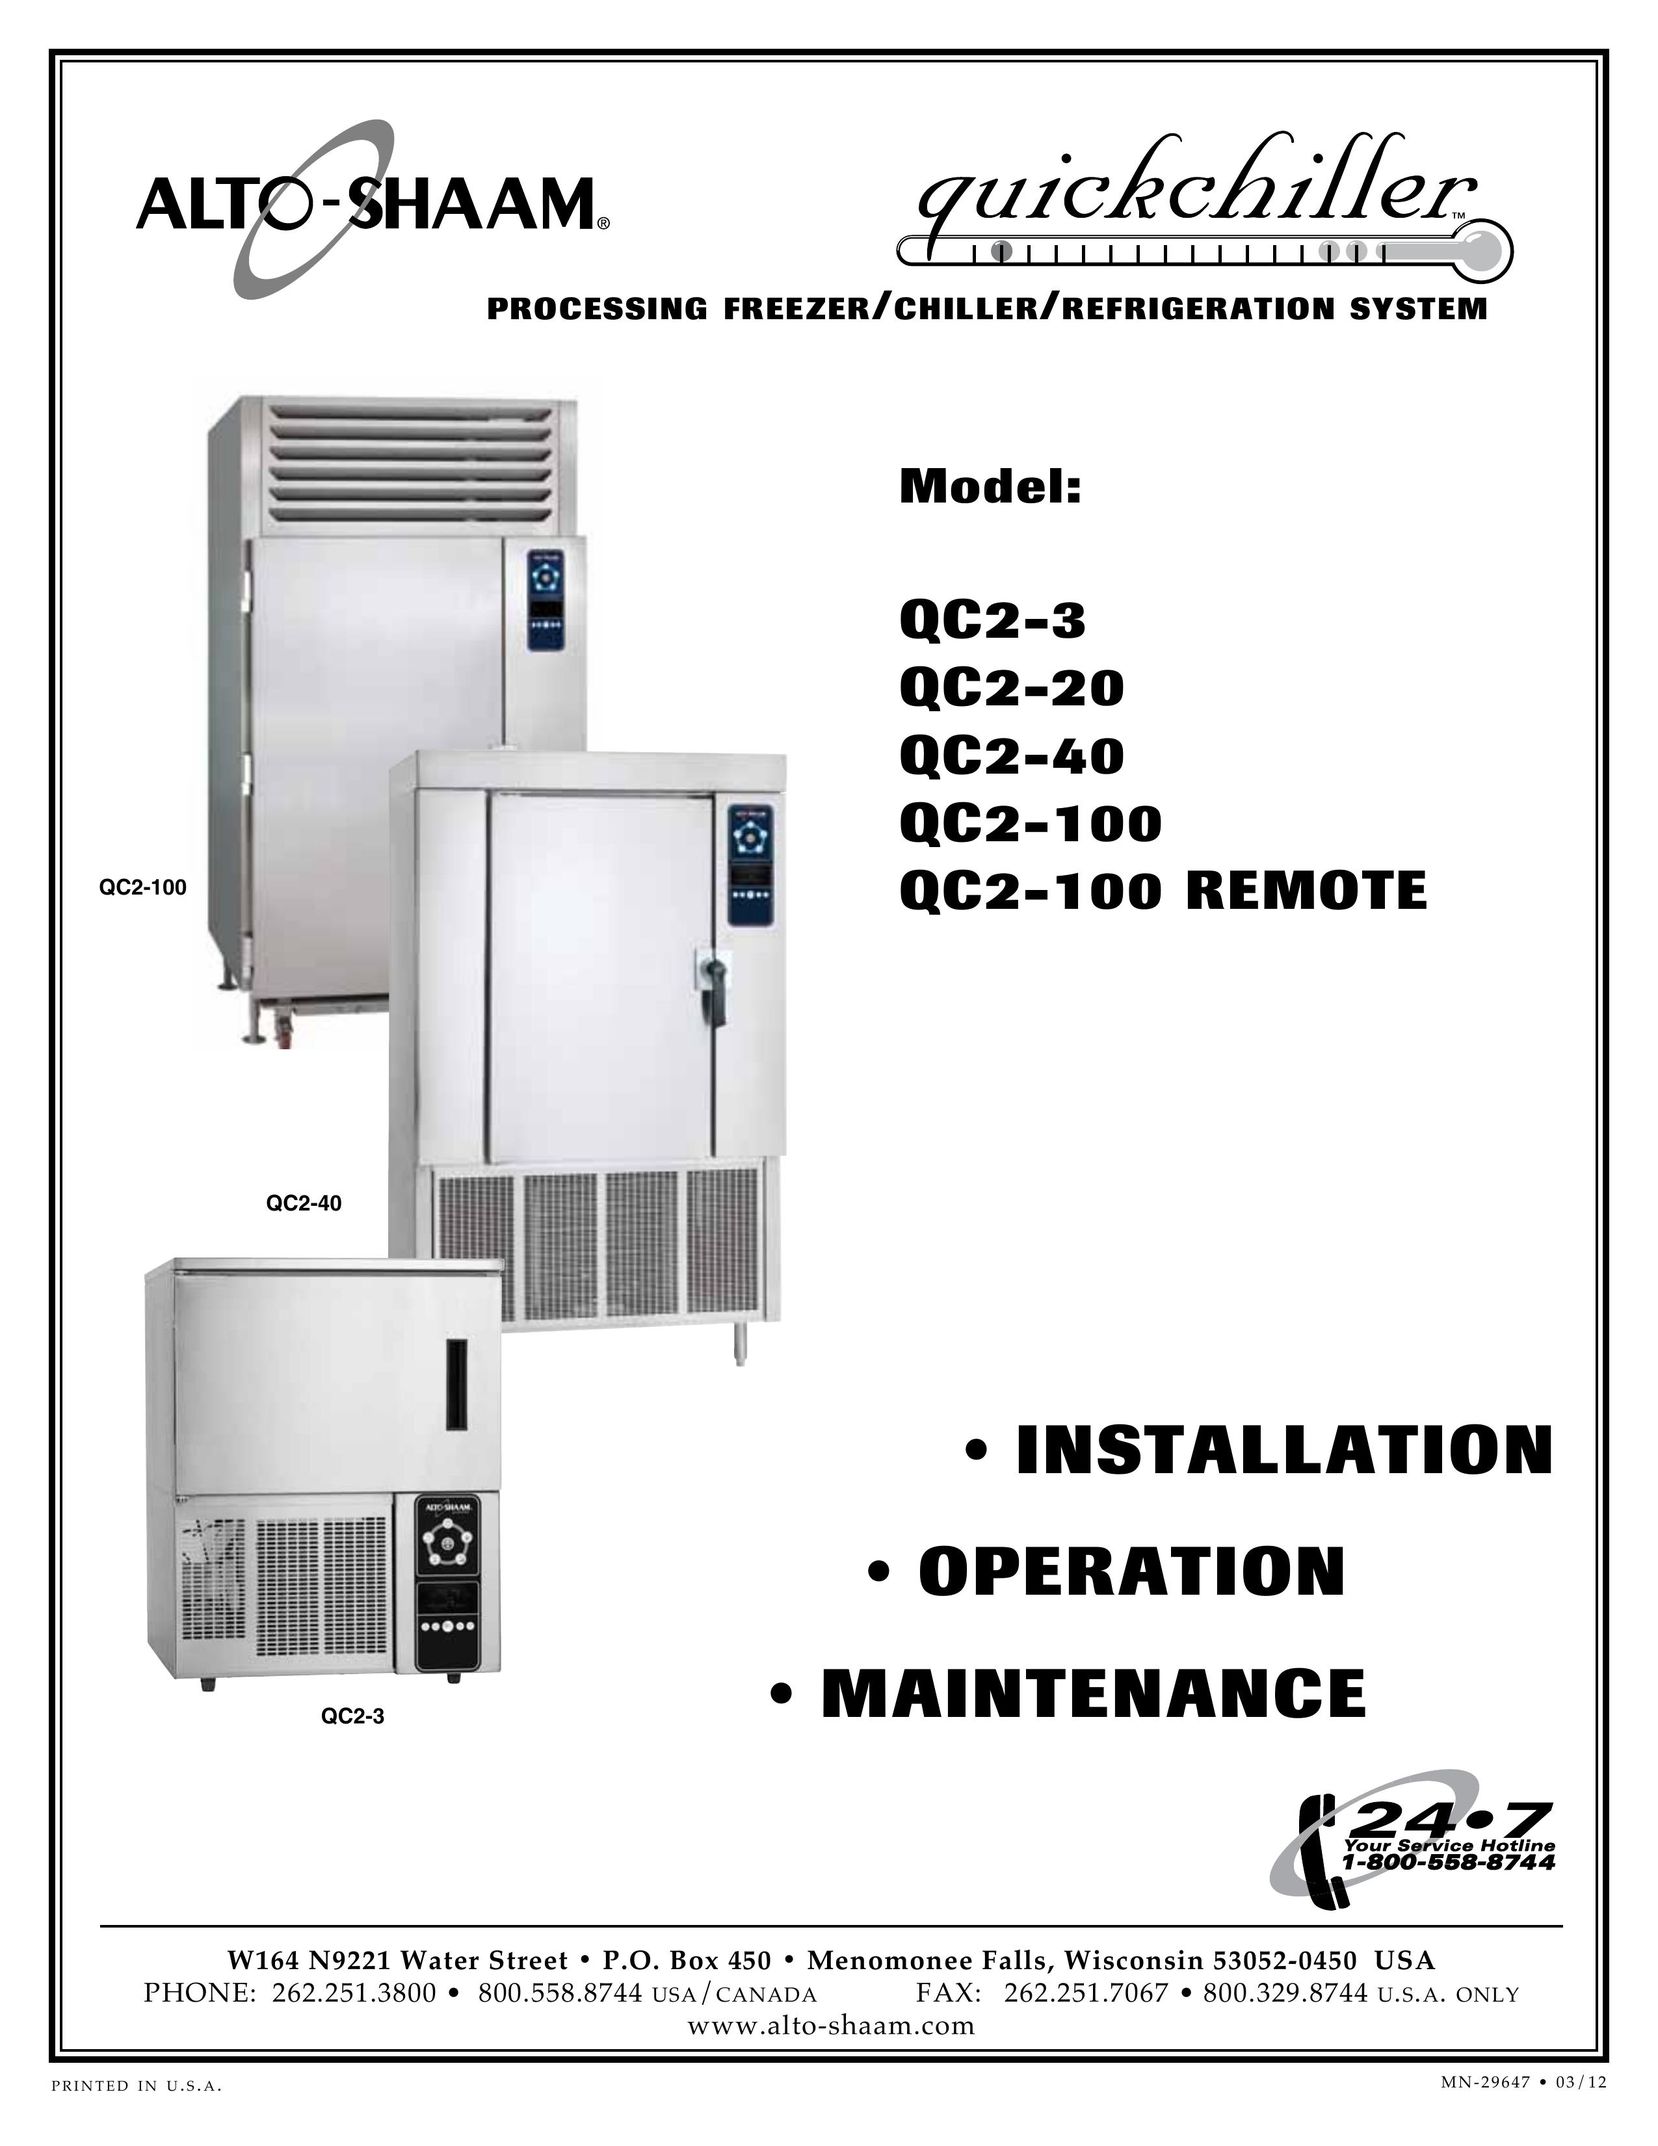 Alto-Shaam QC2-40 Freezer User Manual